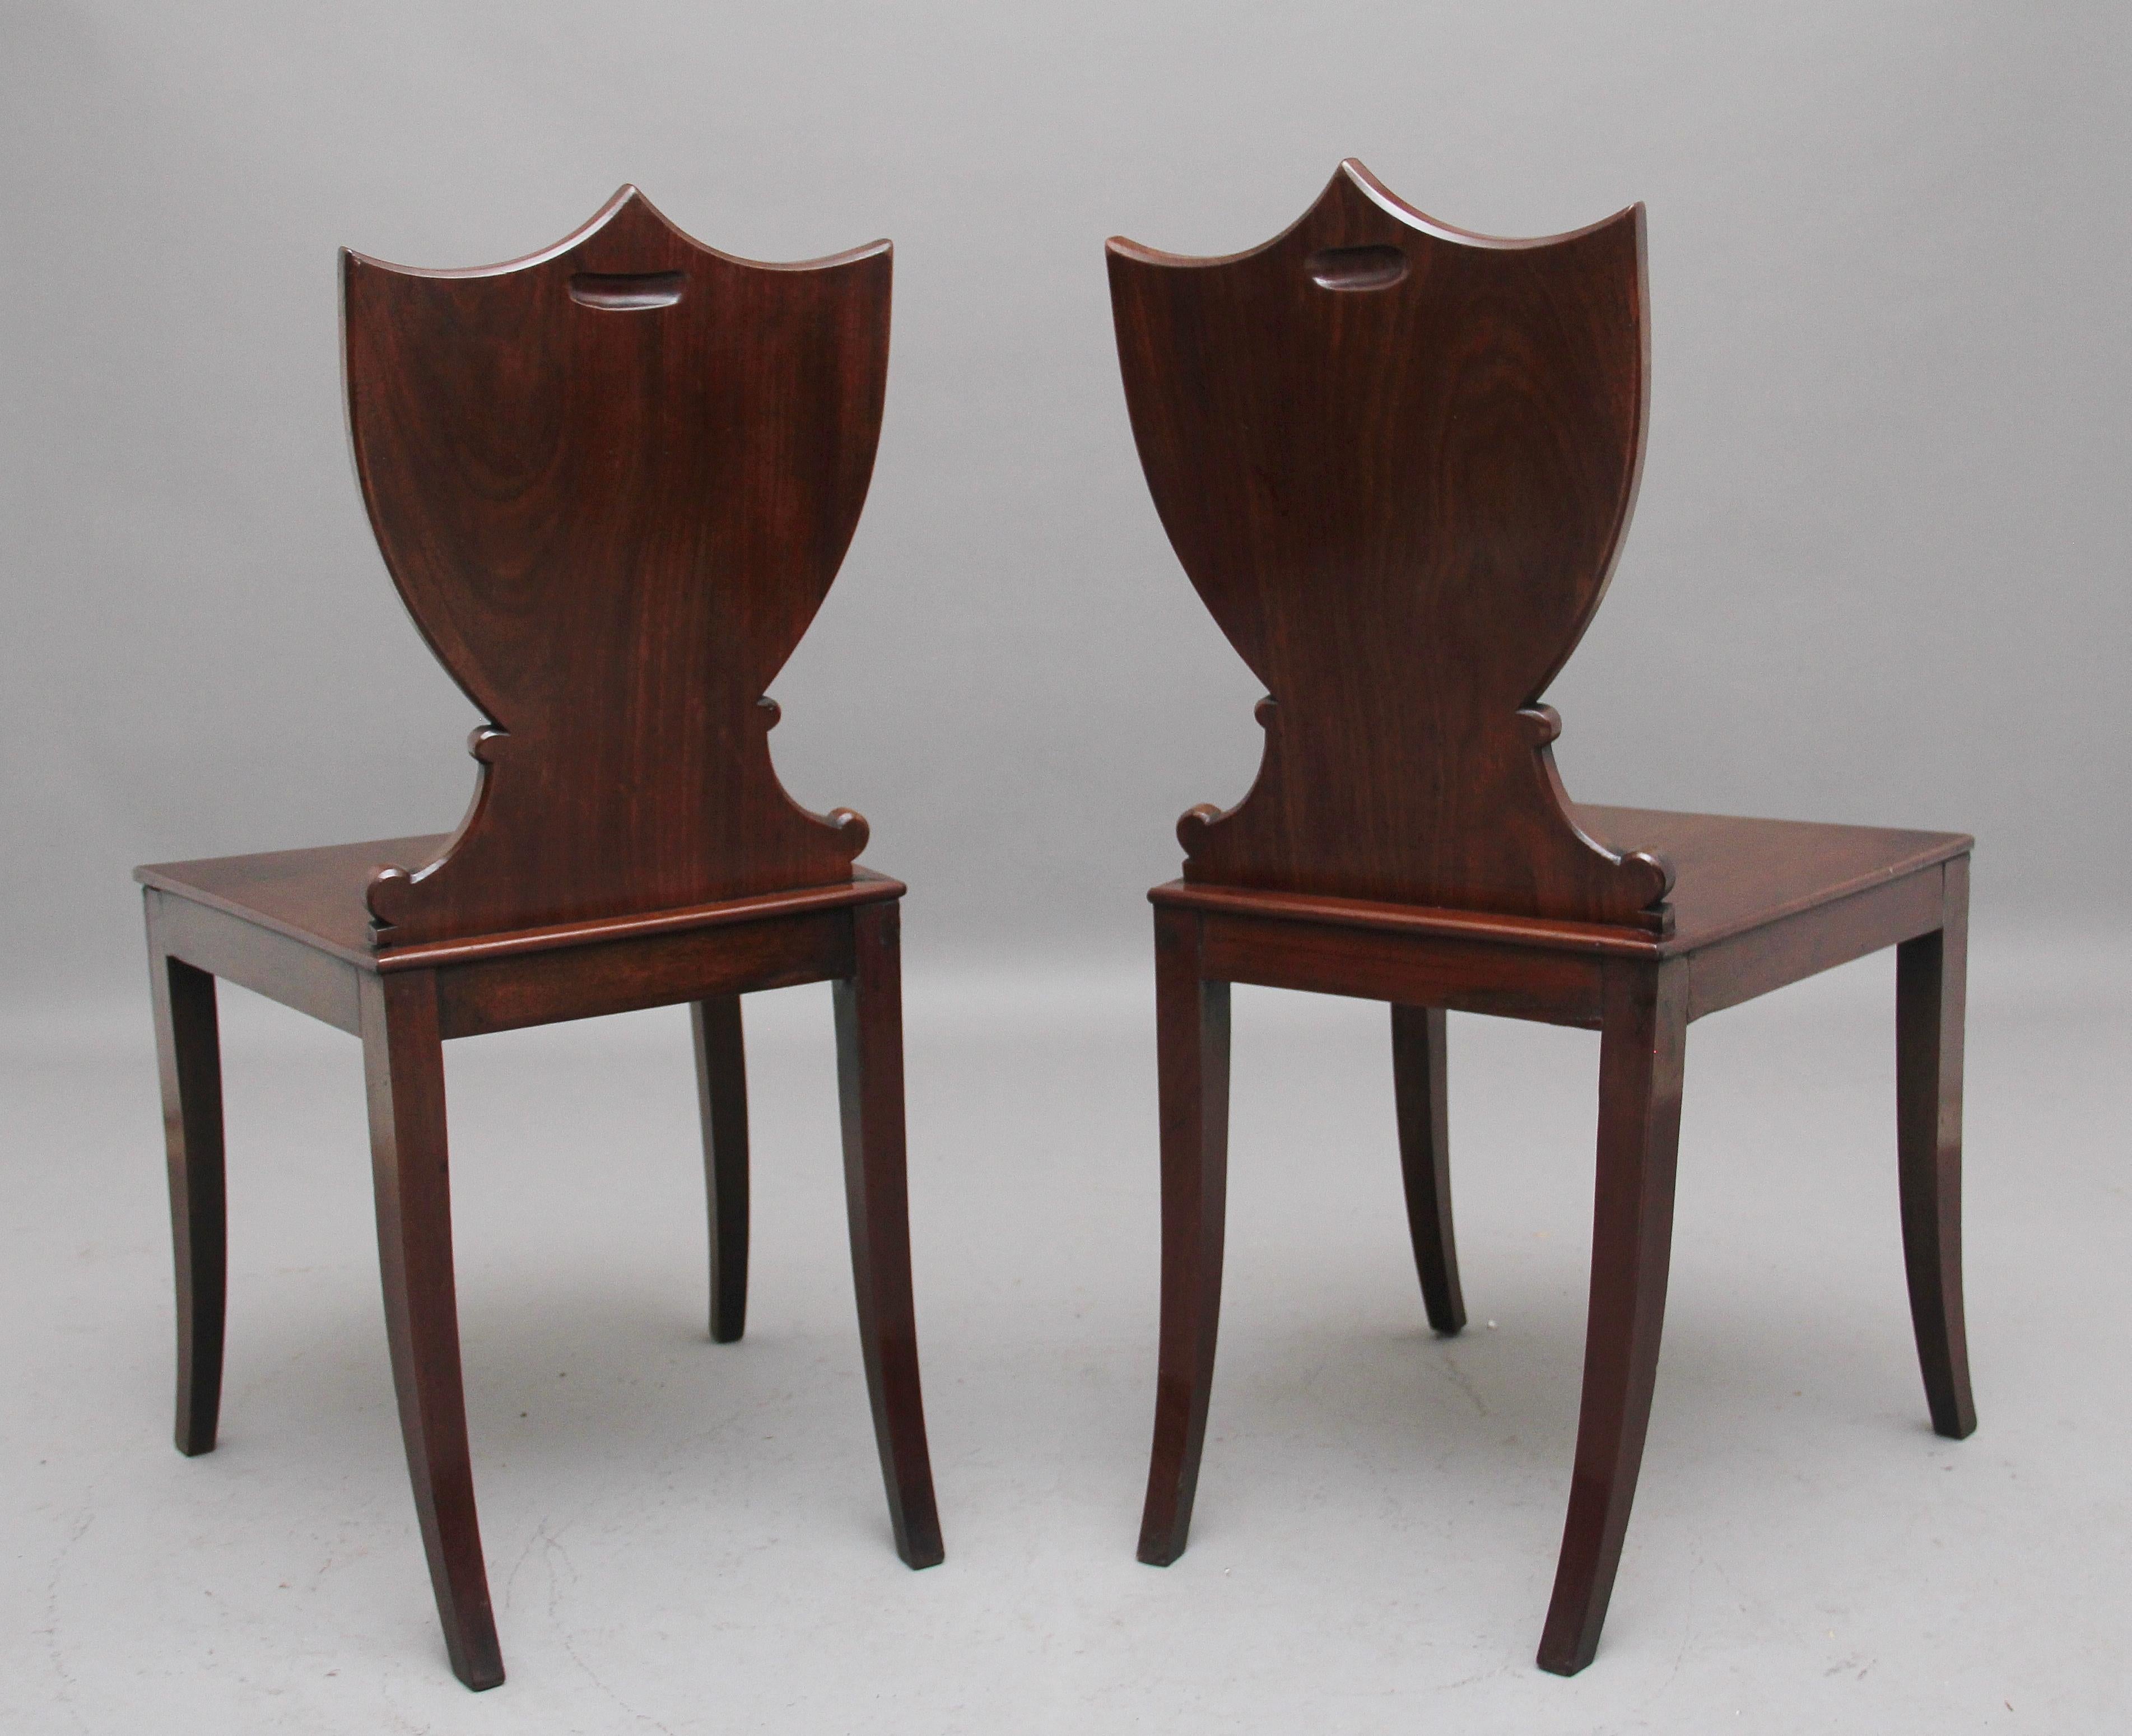 British Pair of Early 19th Century Mahogany Hall Chairs